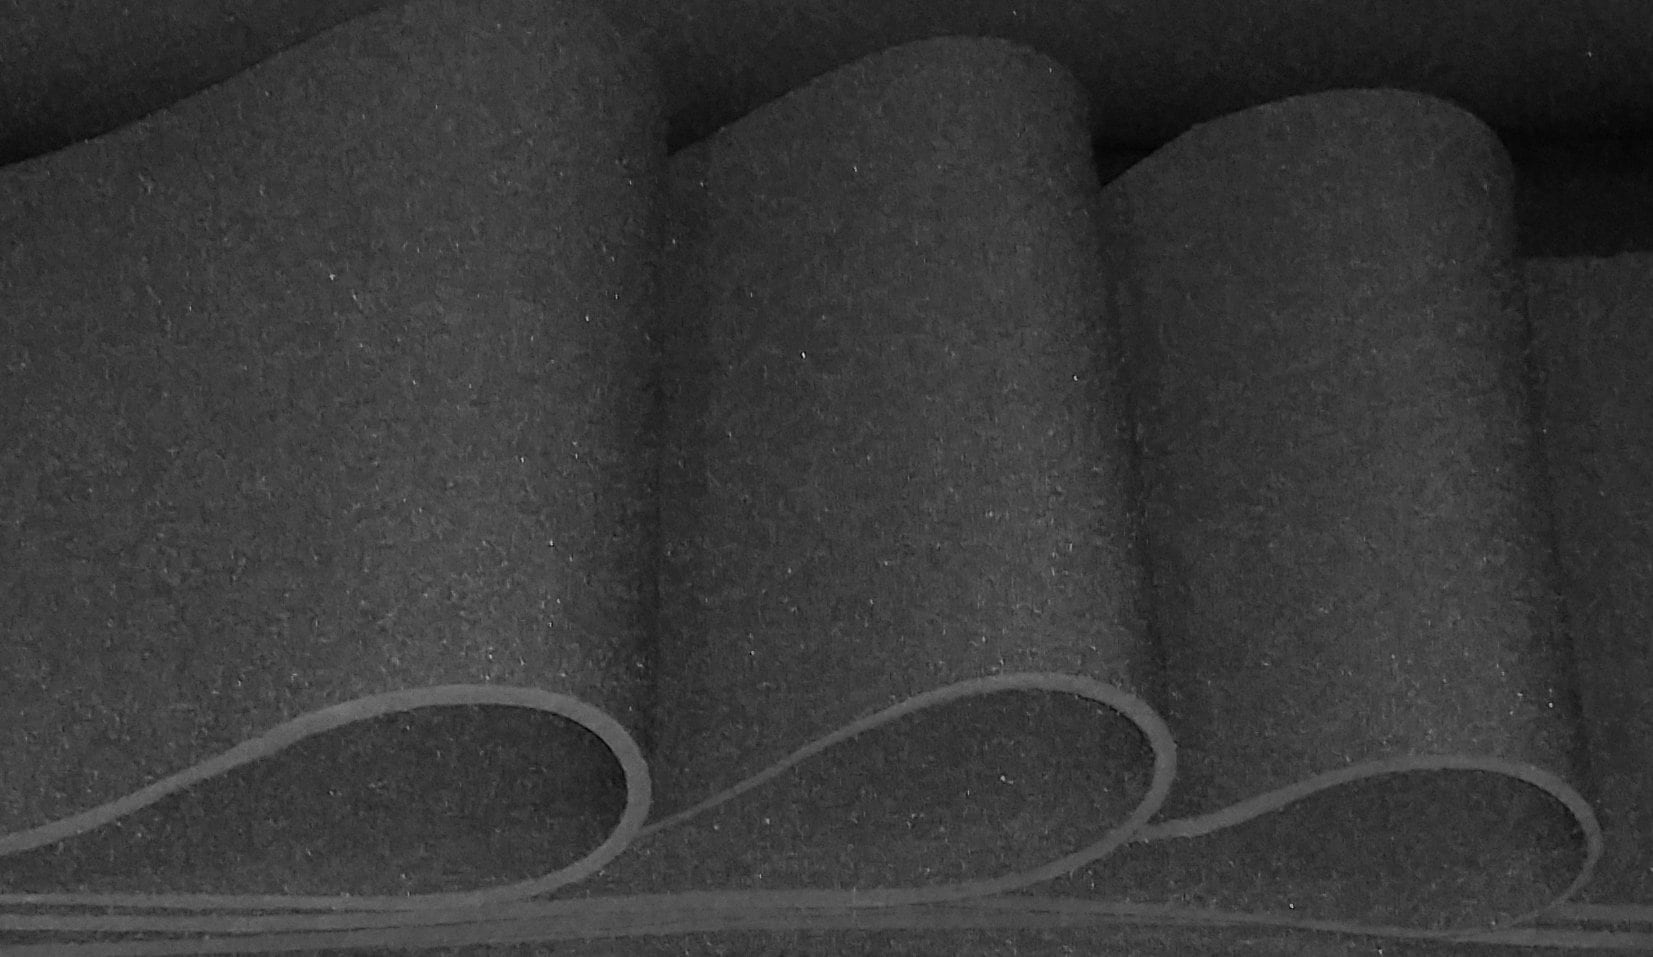 1/4 x 30 x 60 Craft Foam Roll End Hi Dense Closed Cell Foam Uphol  Crafting Foam Craft Supplies Vibration Dampening Sculpting Off White 1Pcs